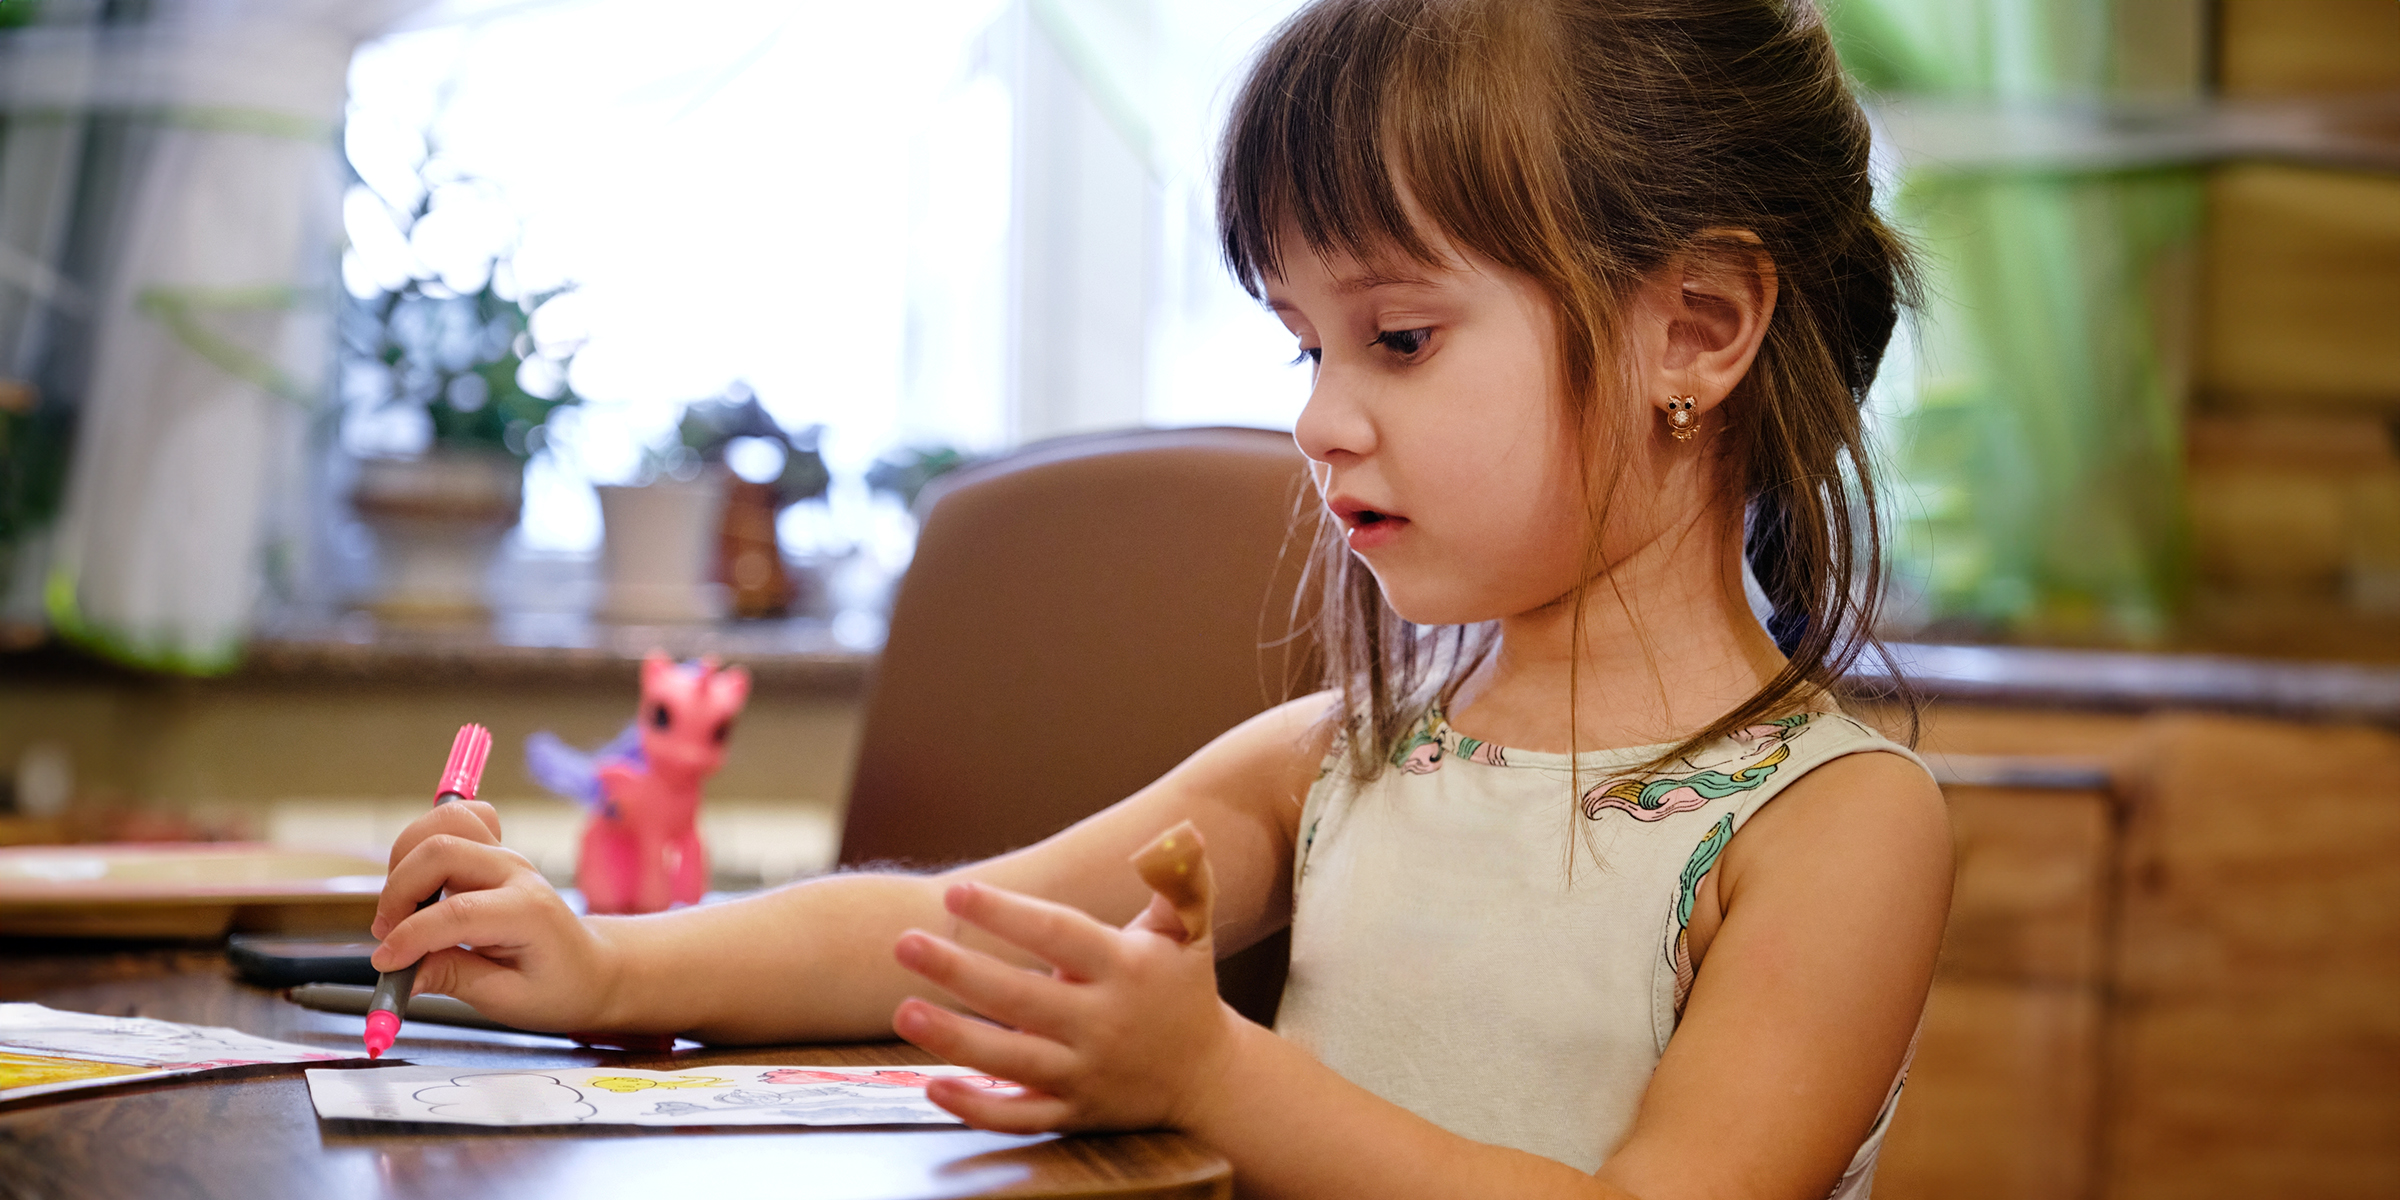 A little girl drawing | Source: Shutterstock